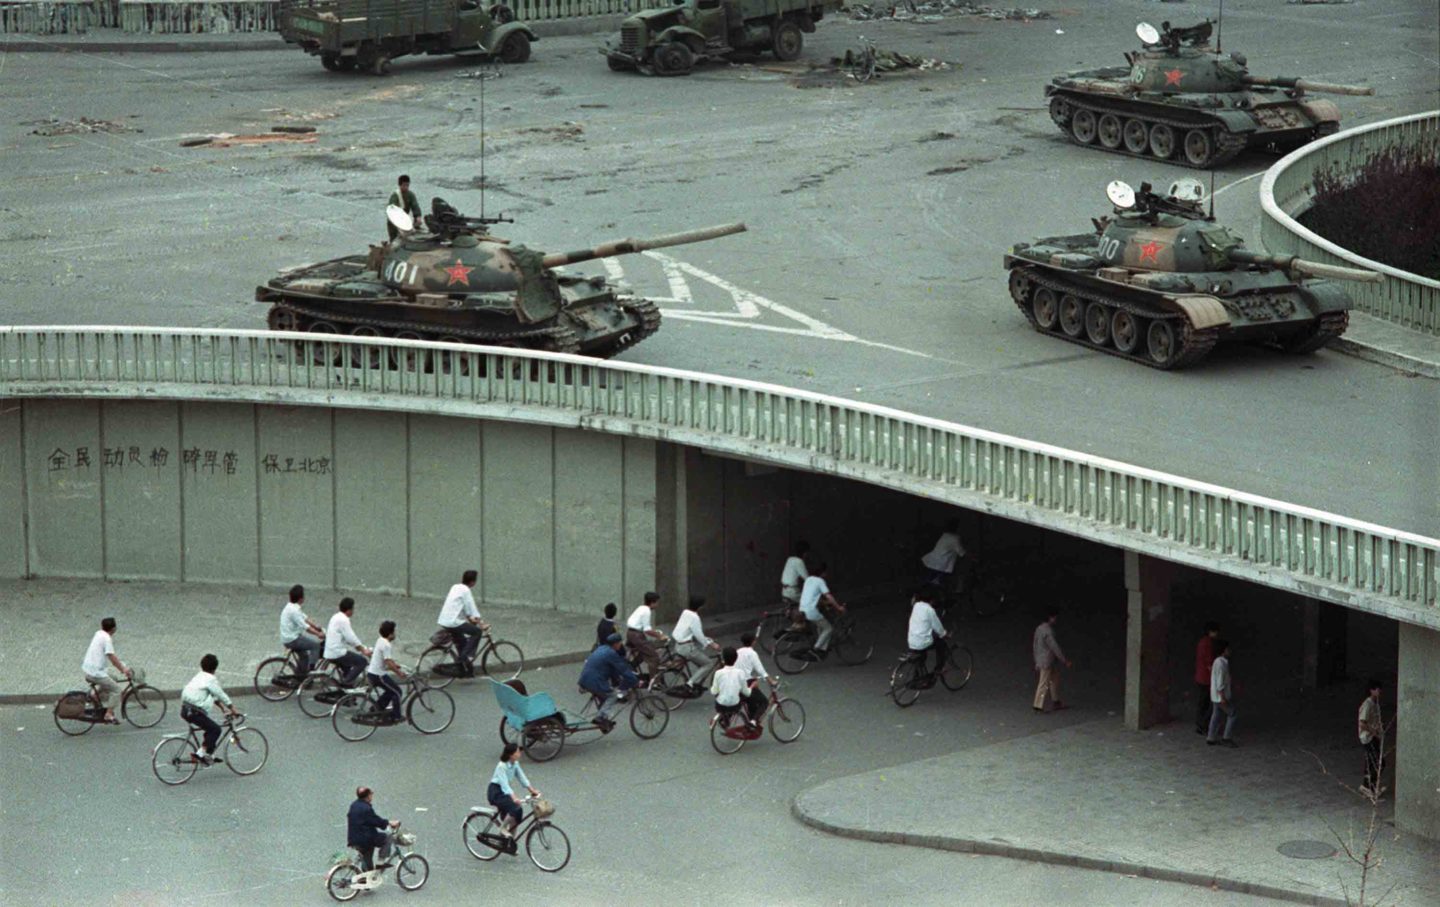 Beijing, after the Tiananmen Square massacre